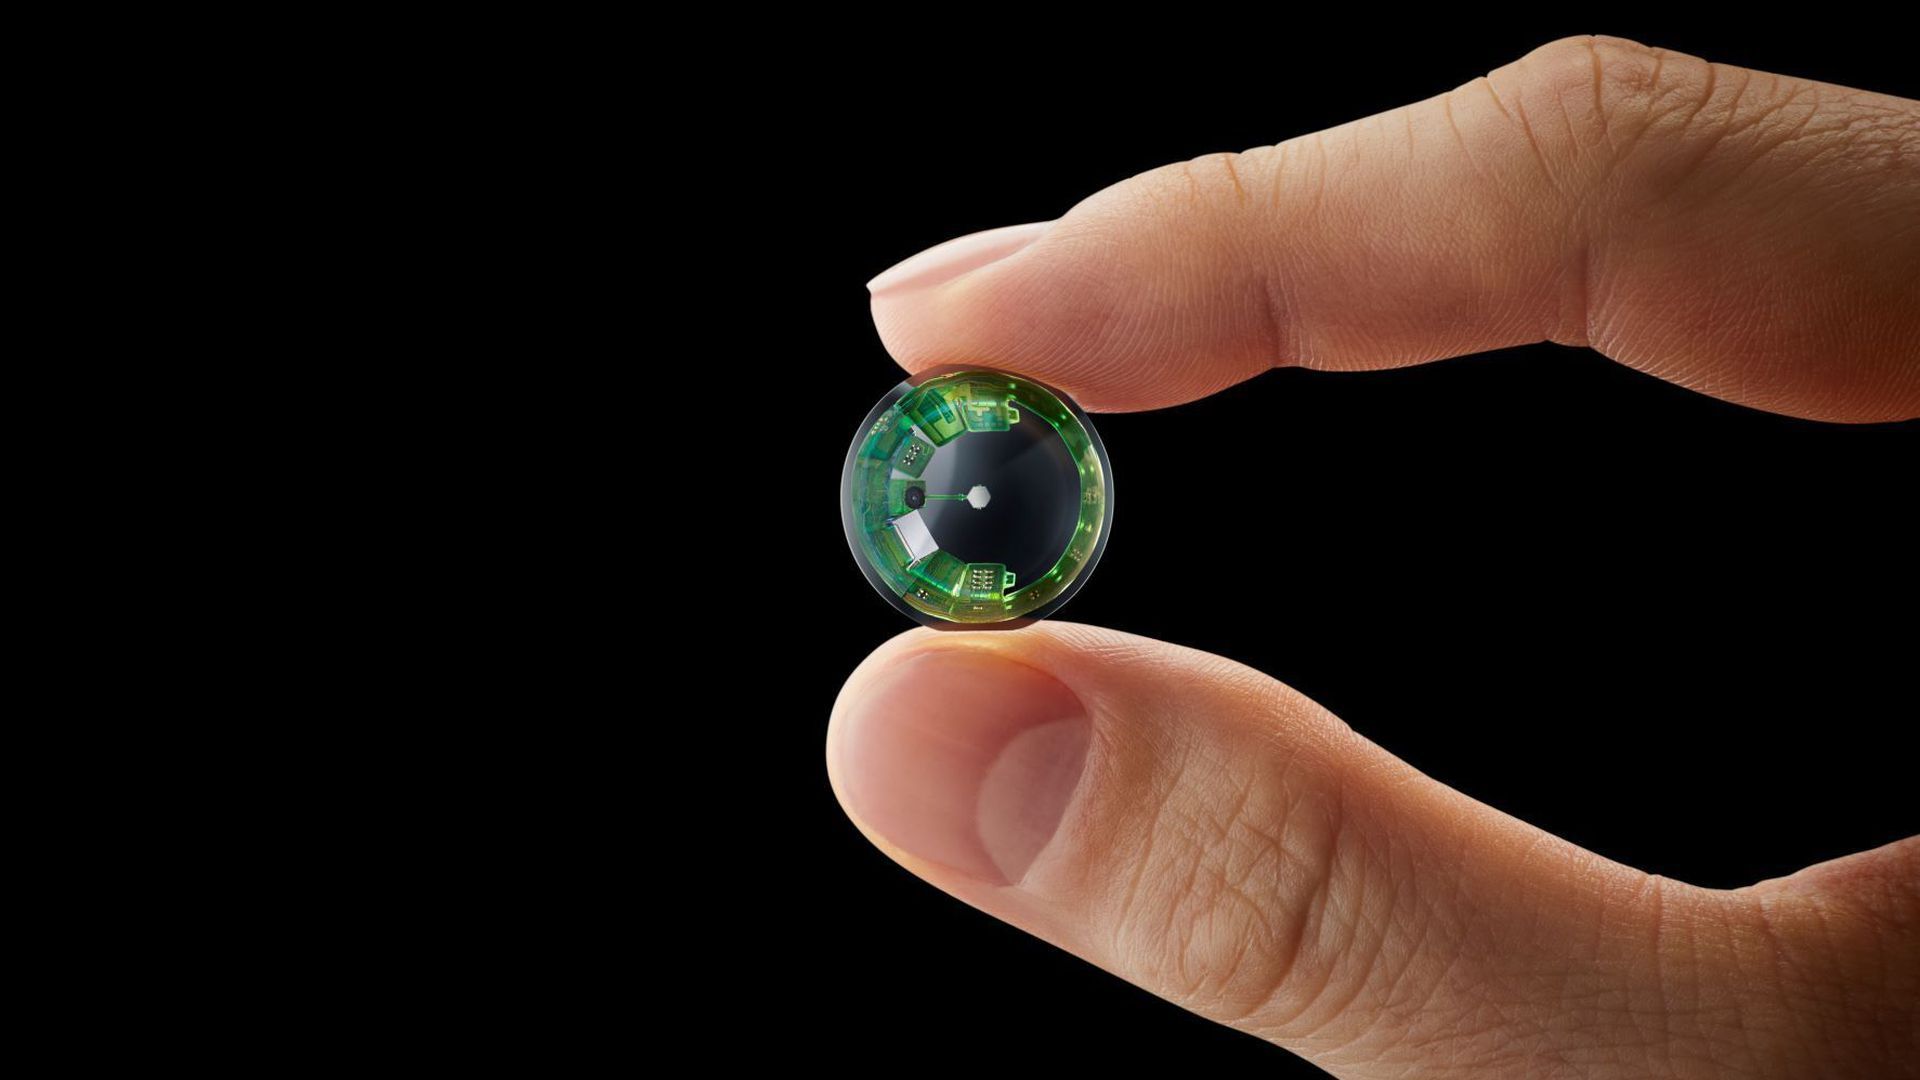 MojoVision's prototype smart contact lens